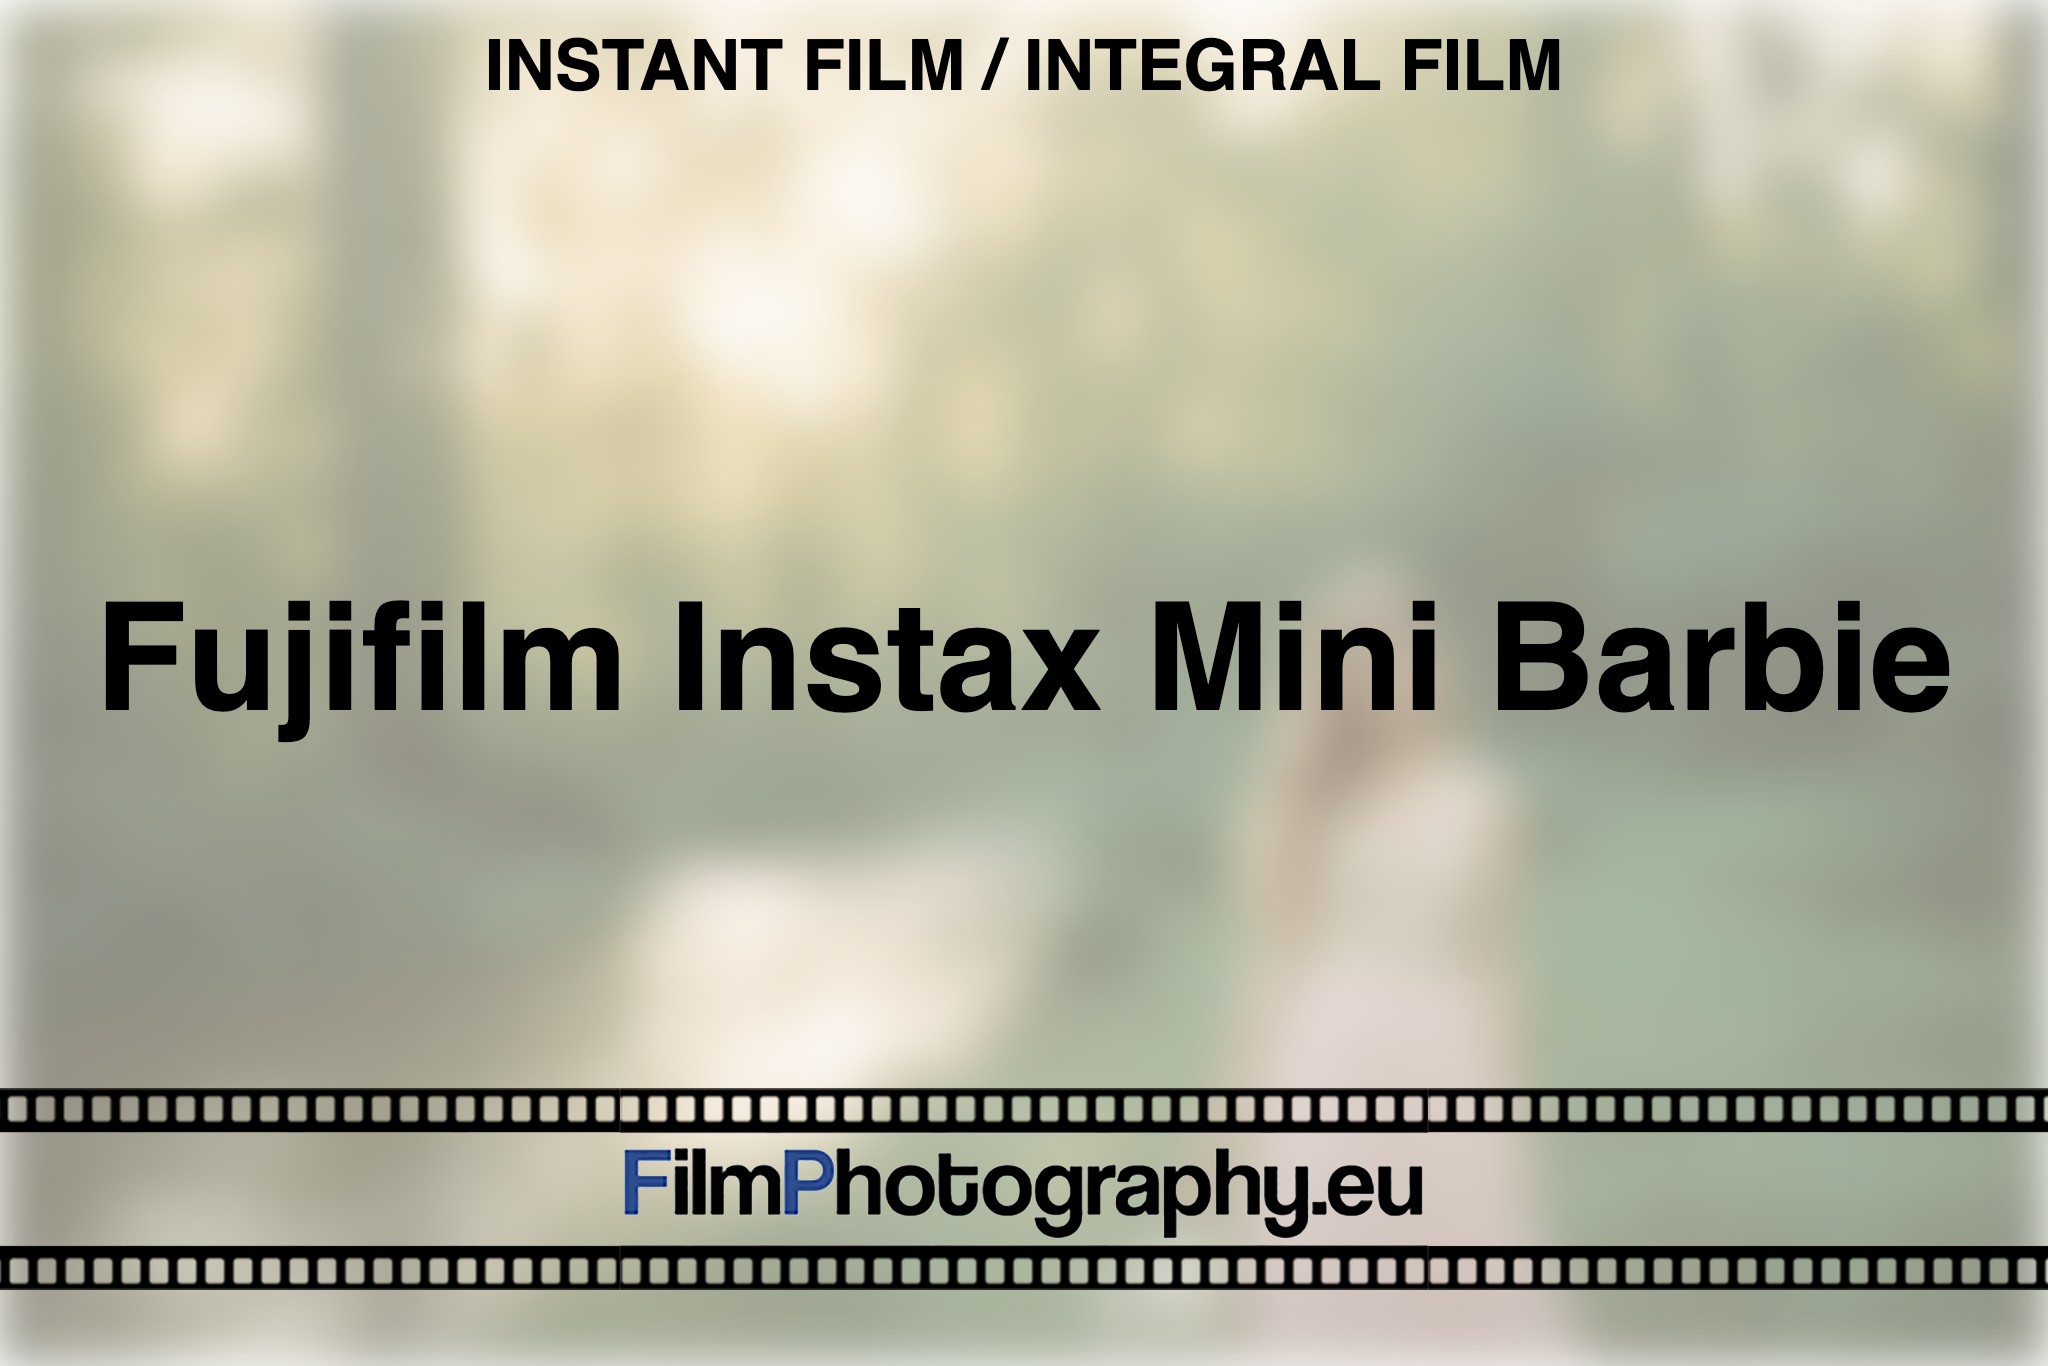 fujifilm-instax-mini-barbie-instant-film-integral-film-bnv